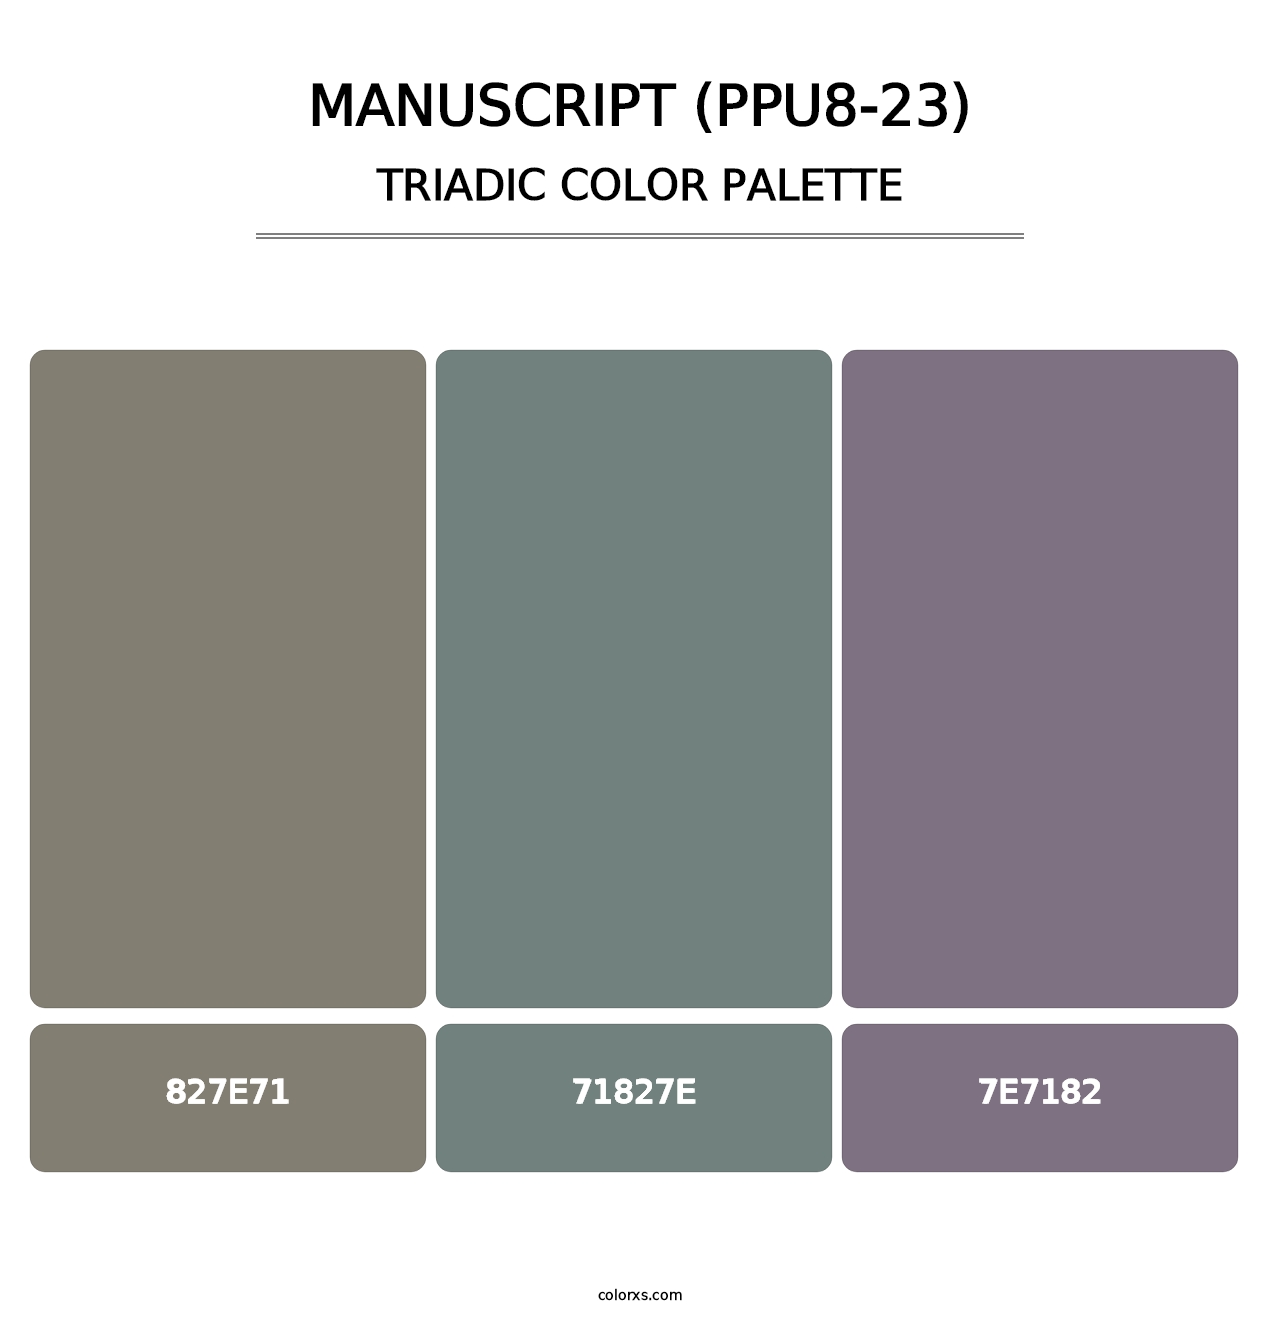 Manuscript (PPU8-23) - Triadic Color Palette